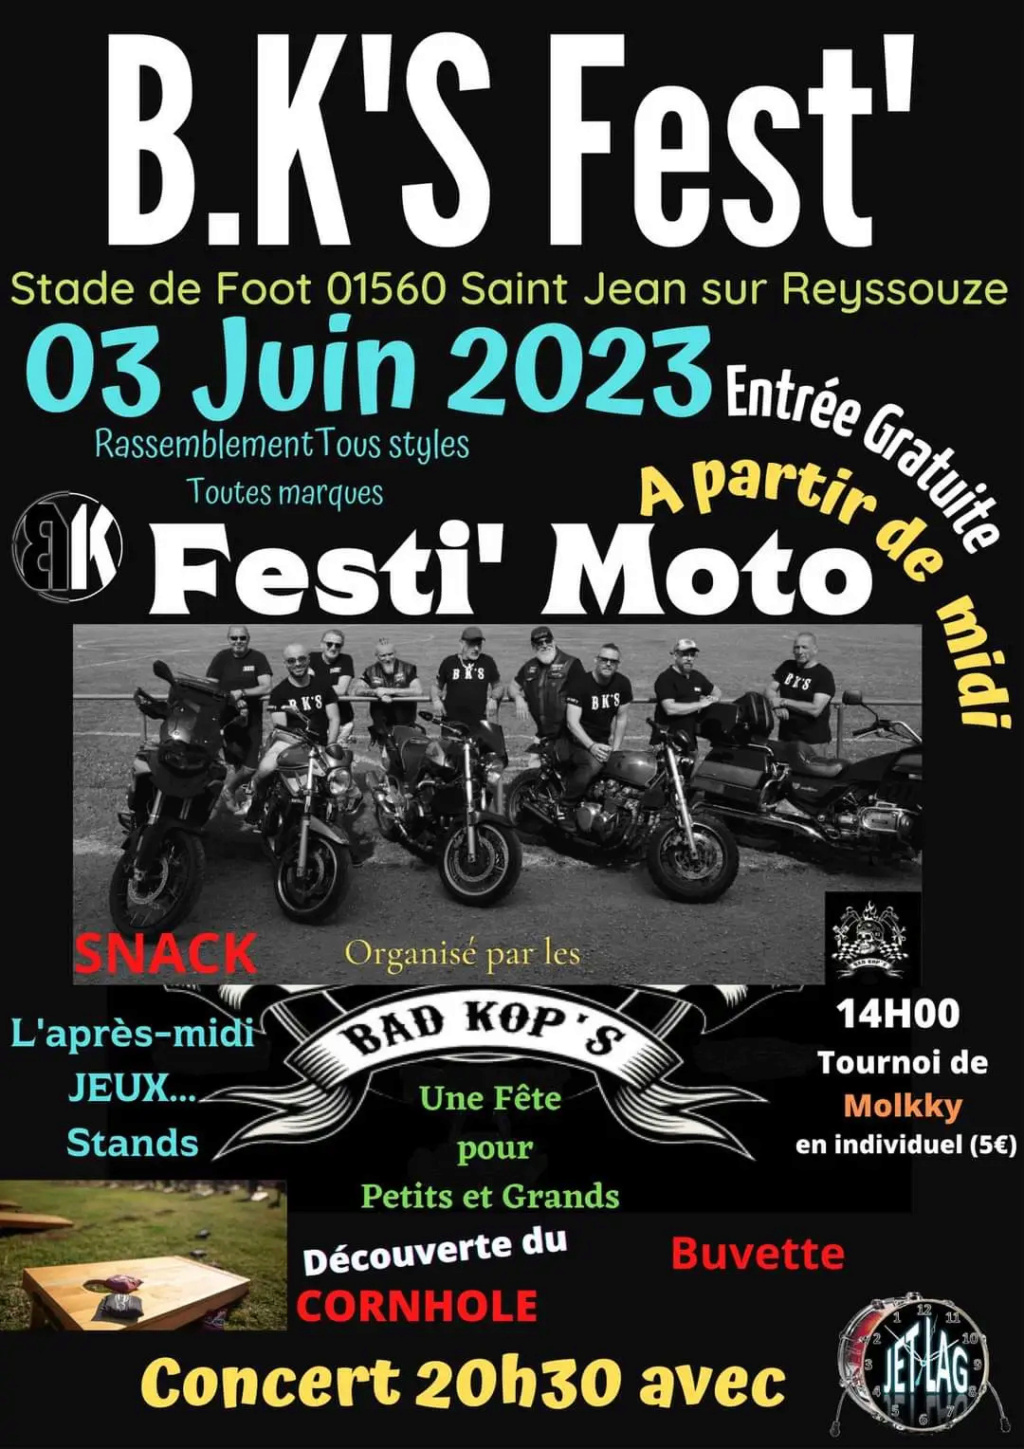 Manifestation -  3 Juin 2023 - Festi ' Moto - 3 Juin 2023 - St Jean sur Reyssouze (01560)) Faceb115